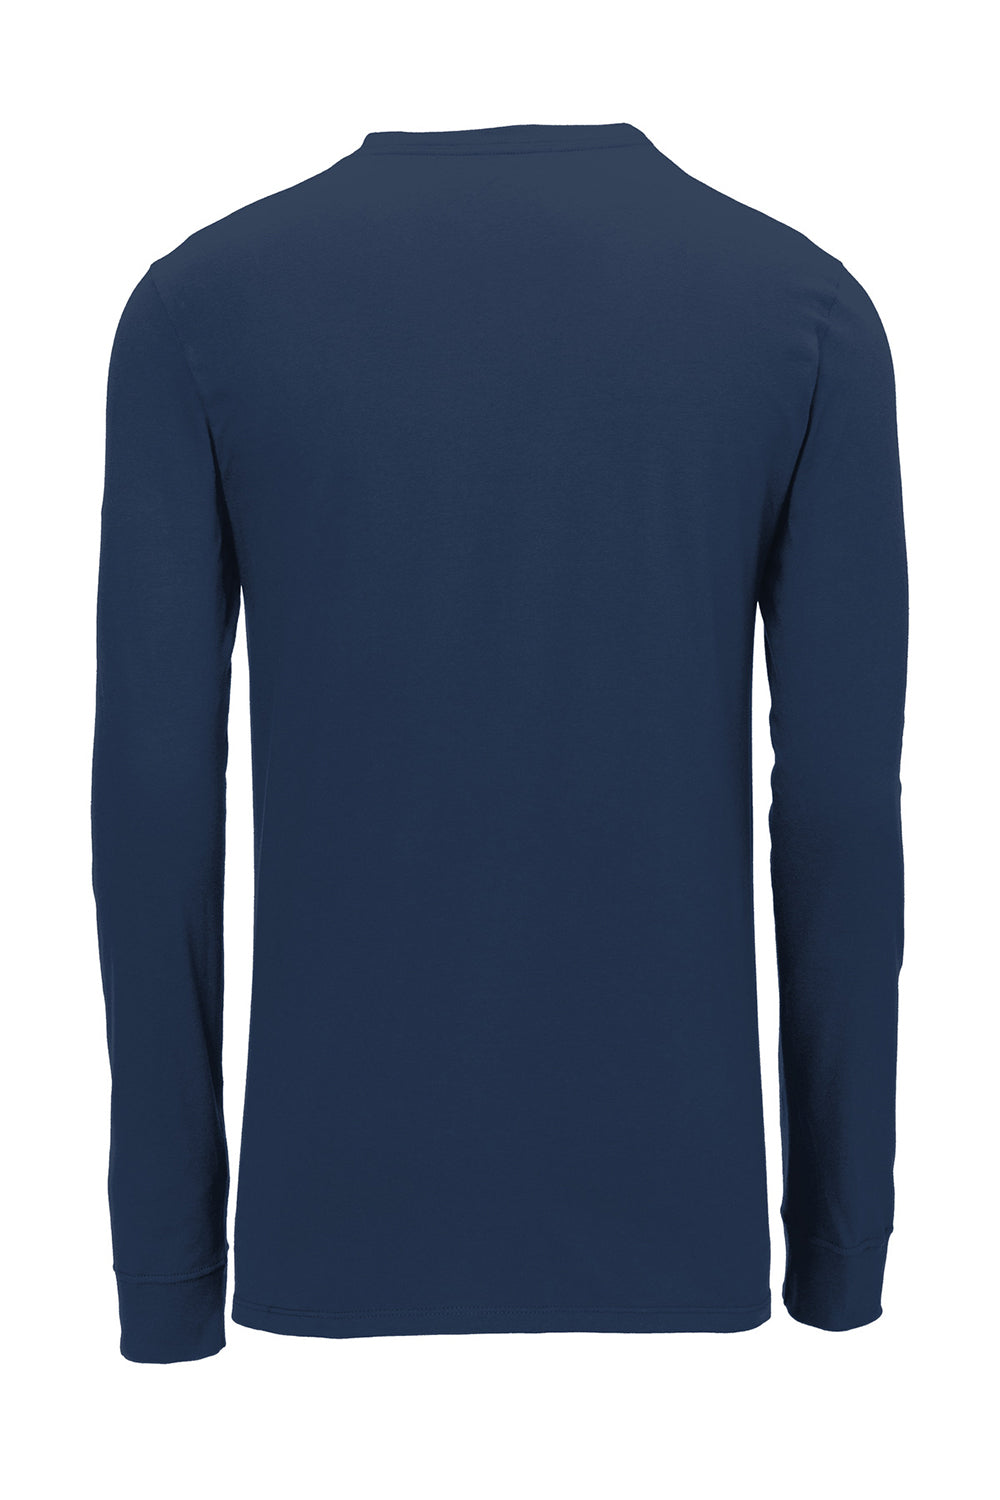 Nike NKBQ5230 Mens Dri-Fit Moisture Wicking Long Sleeve Crewneck T-Shirt College Navy Blue Flat Back